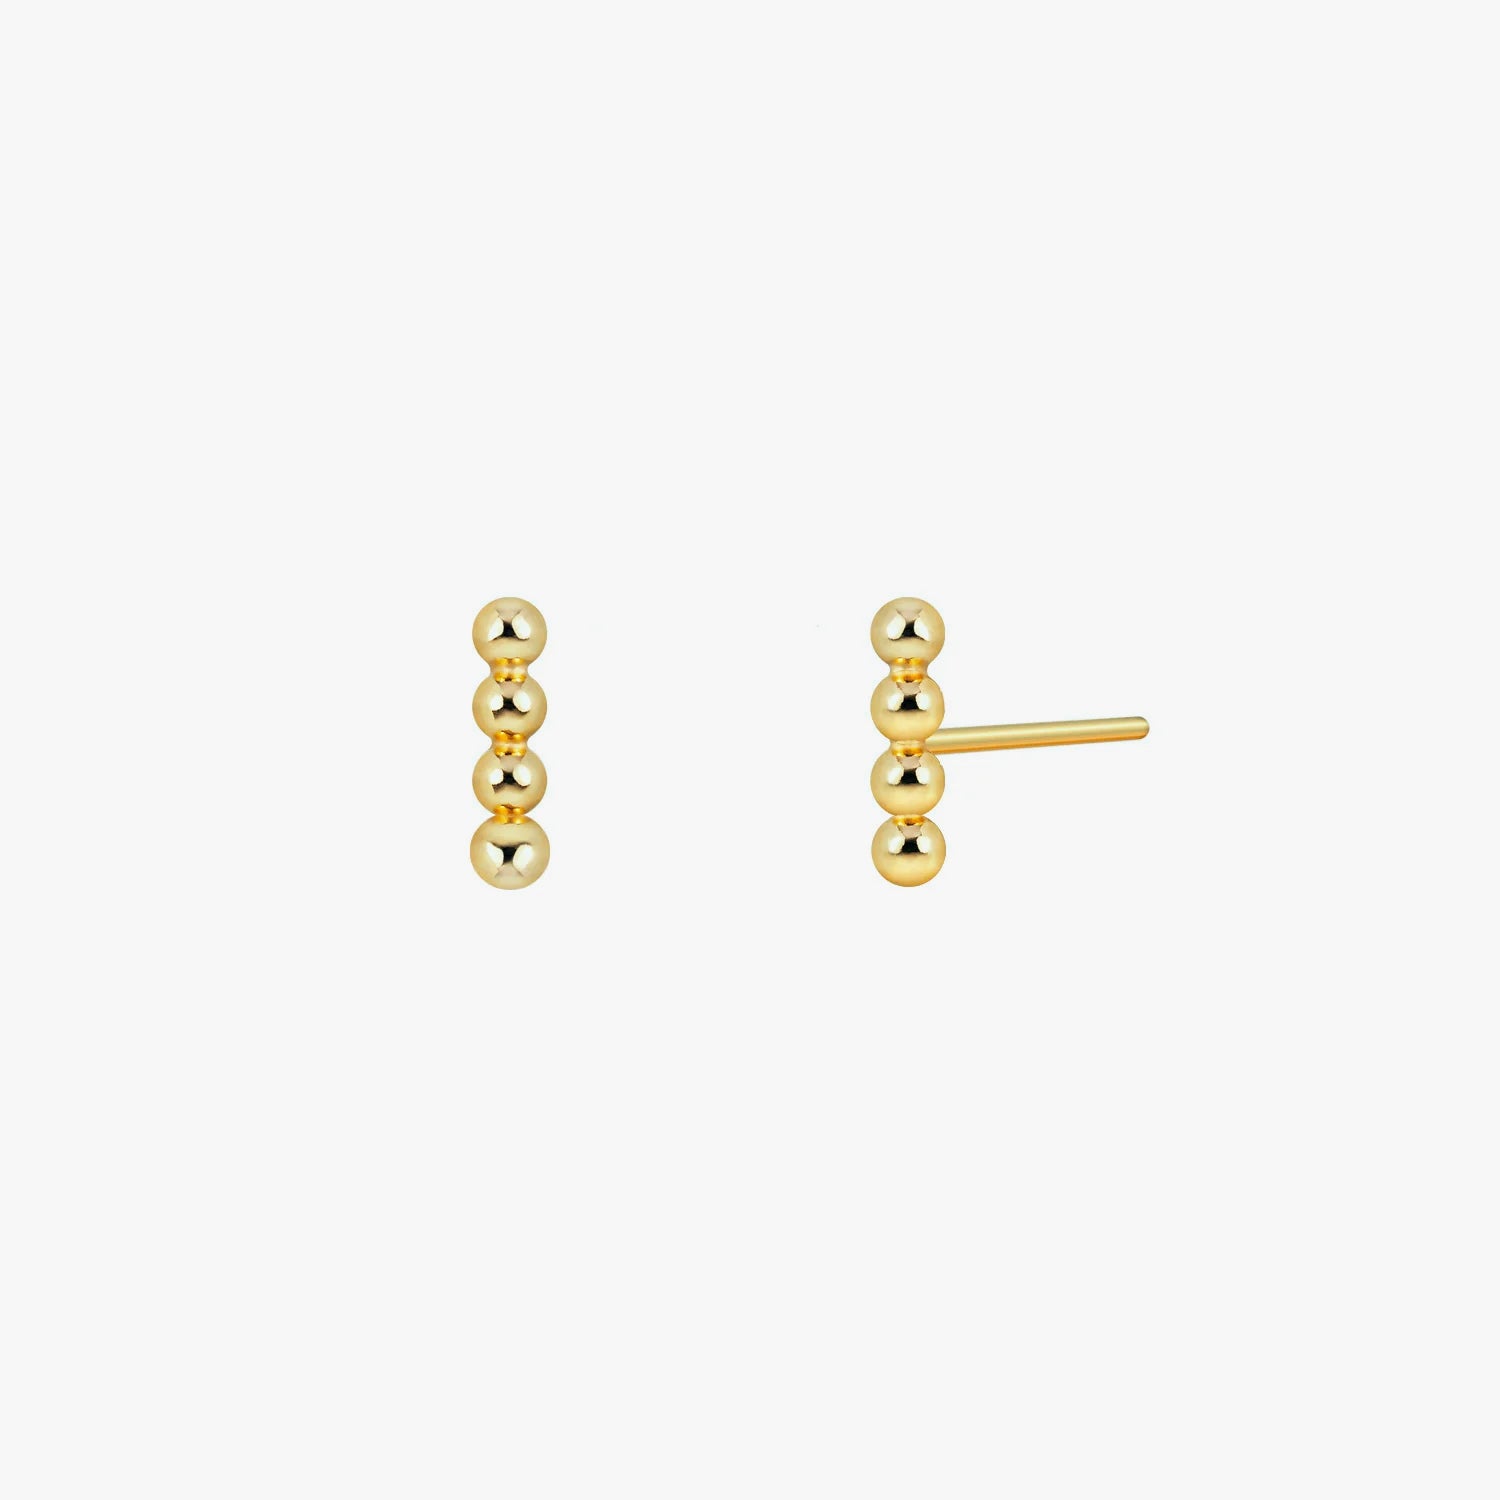 14K Gold Bubble Earring Backs (2 pieces)